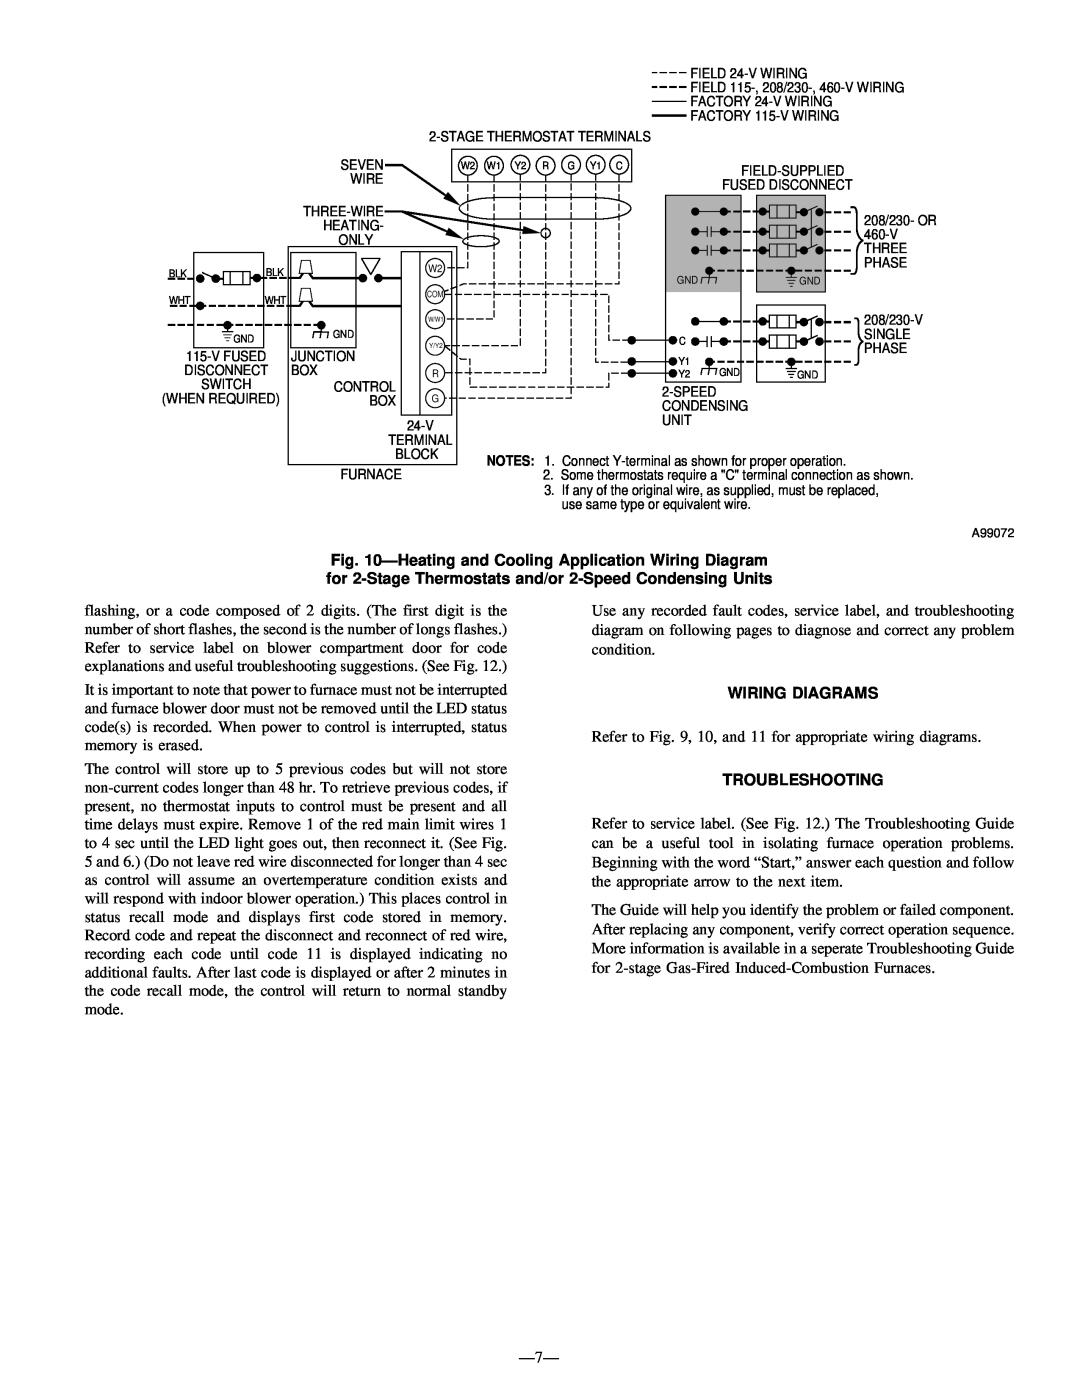 Bryant 330JAV, 331JAV instruction manual Wiring Diagrams, Troubleshooting 